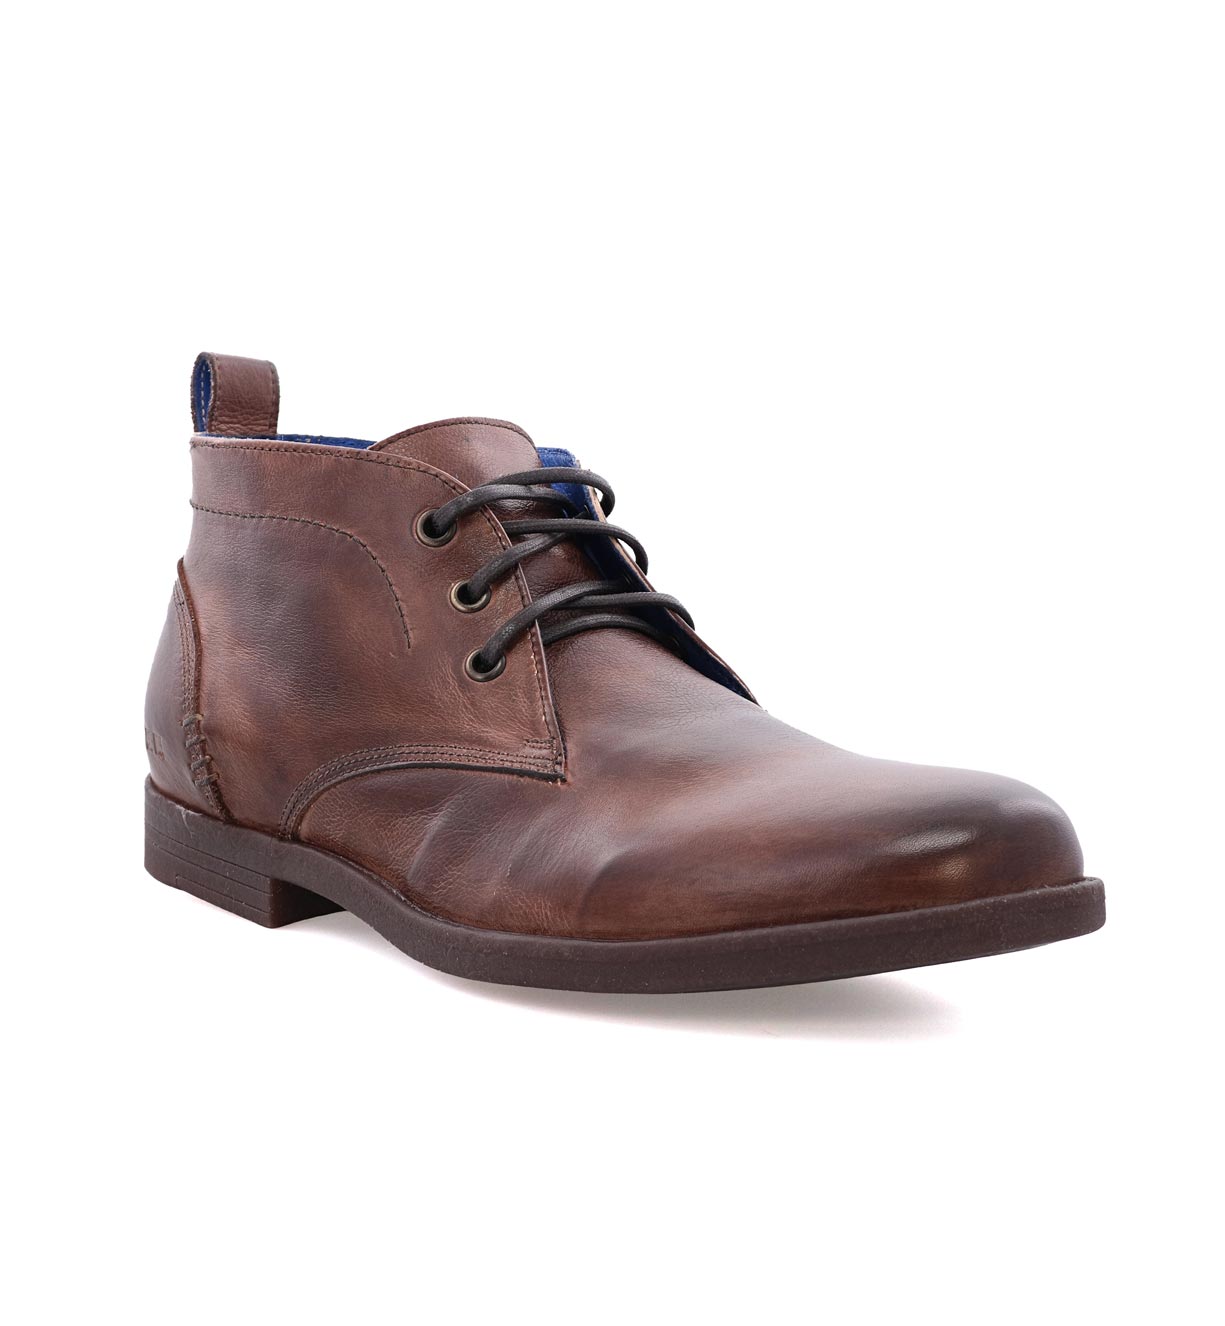 Bed Stu Illiad men's brown leather chukka boots.